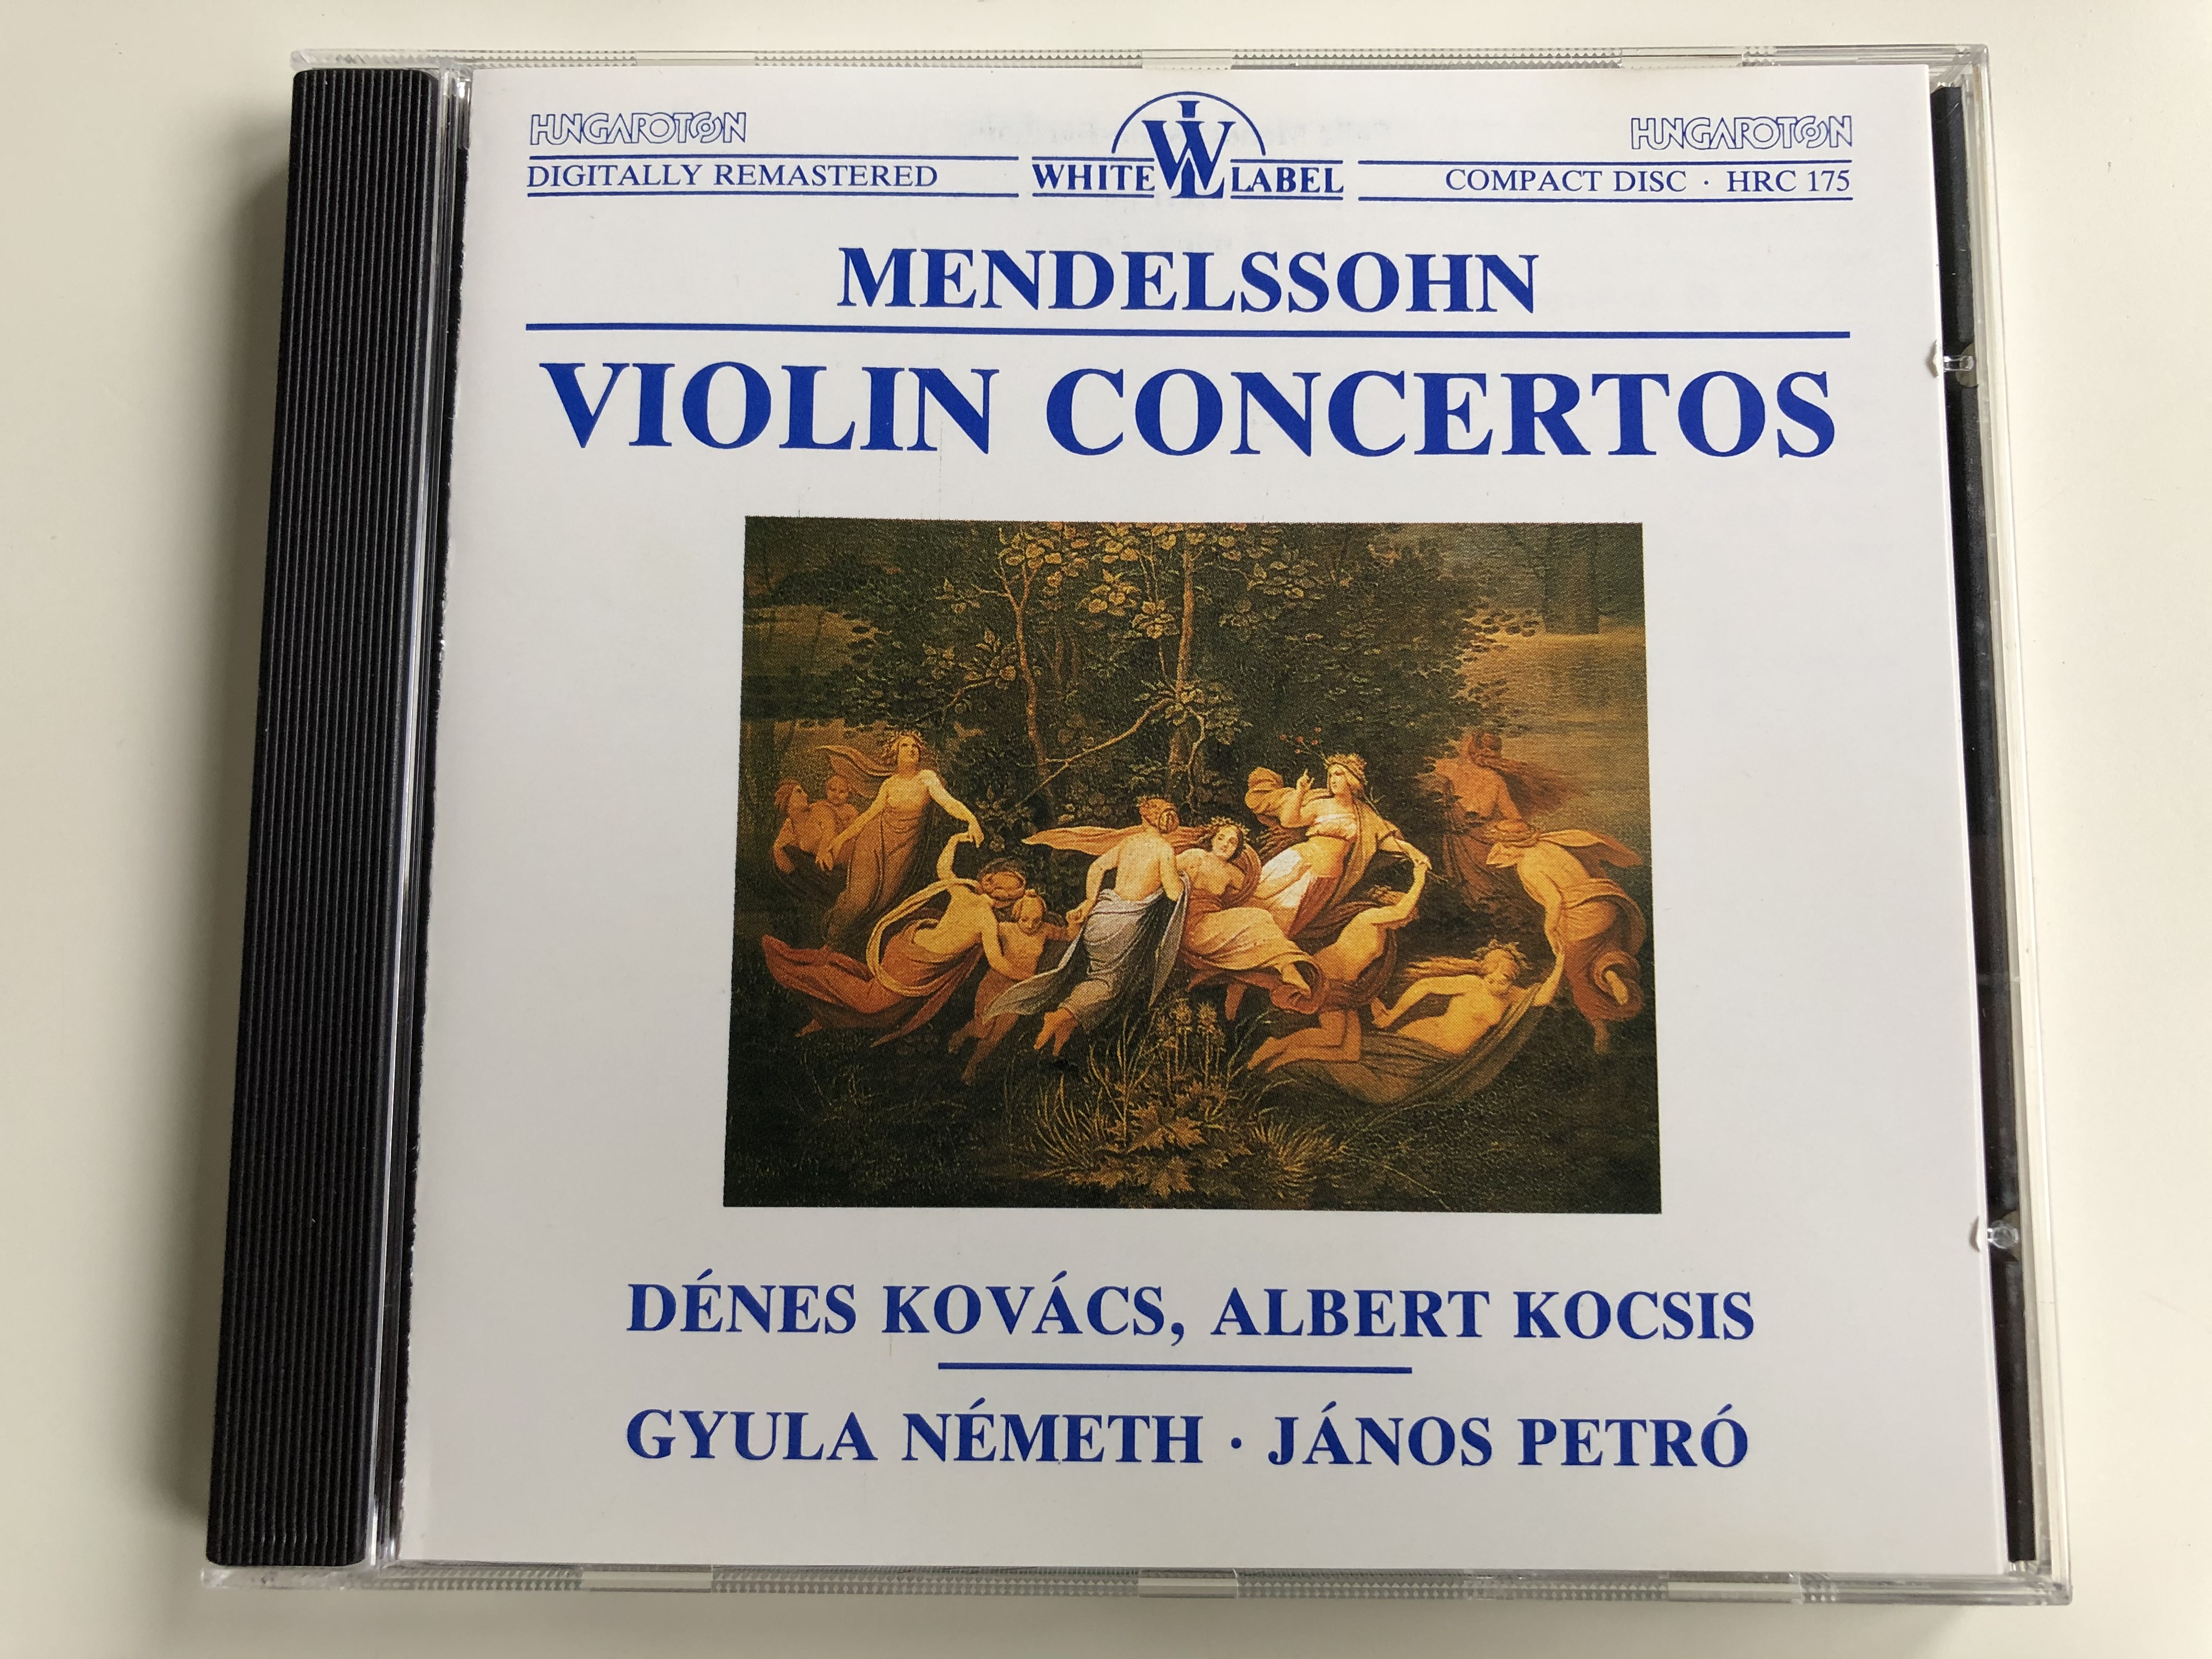 mendelssohn-violin-concertos-denes-kovacs-albert-kocsis-gyula-nemeth-janos-petro-hungaroton-audio-cd-1990-stereo-hrc-175-1-.jpg